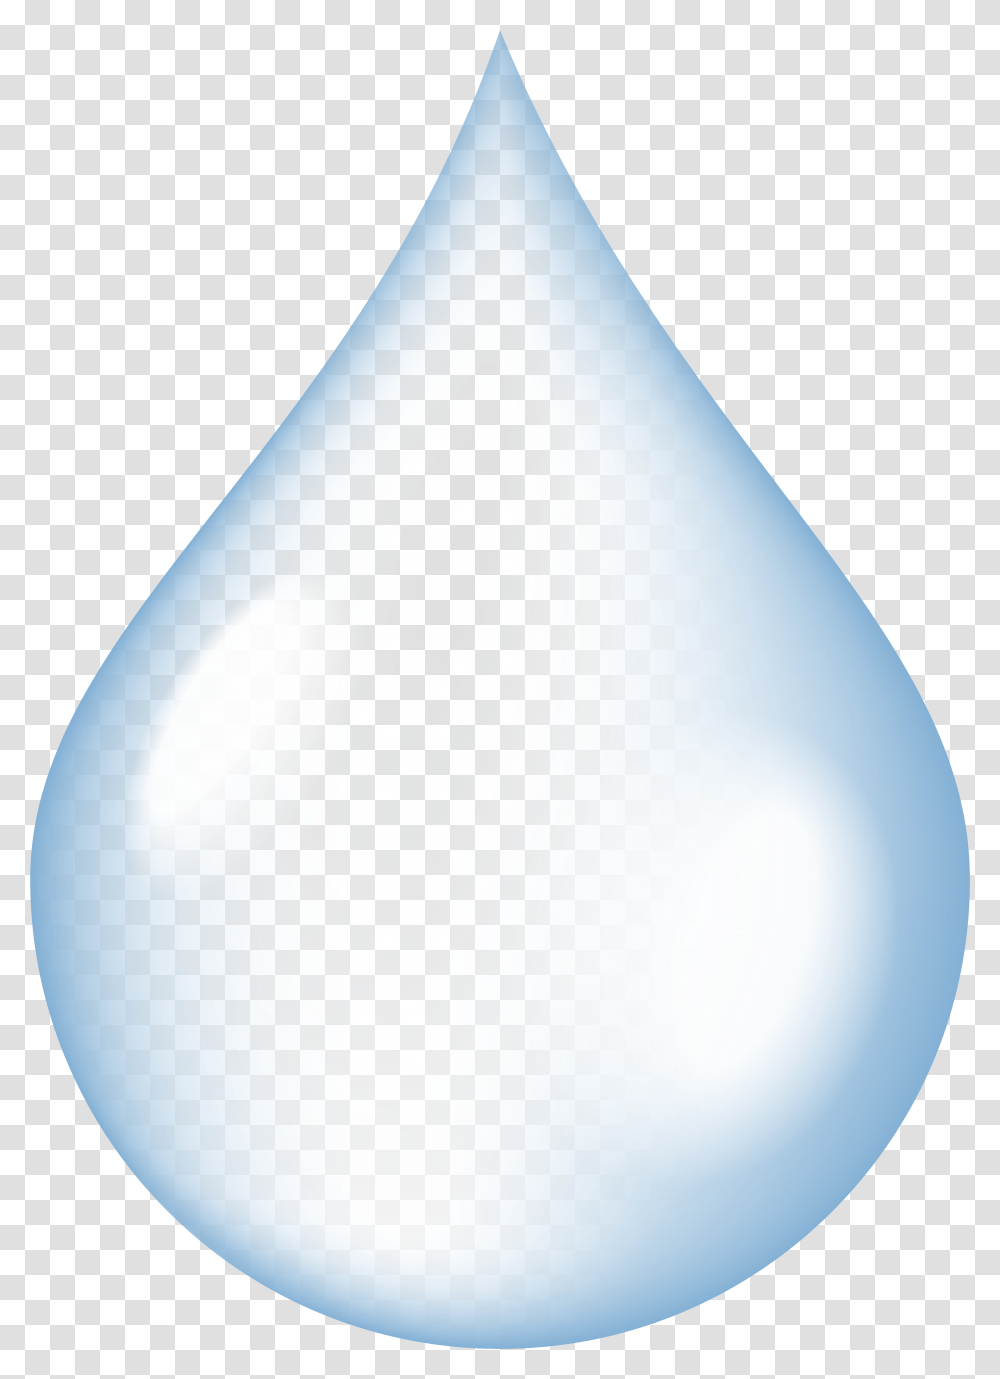 Best Water Drop Clipart Water Drops, Droplet, Lamp, Ornament Transparent Png